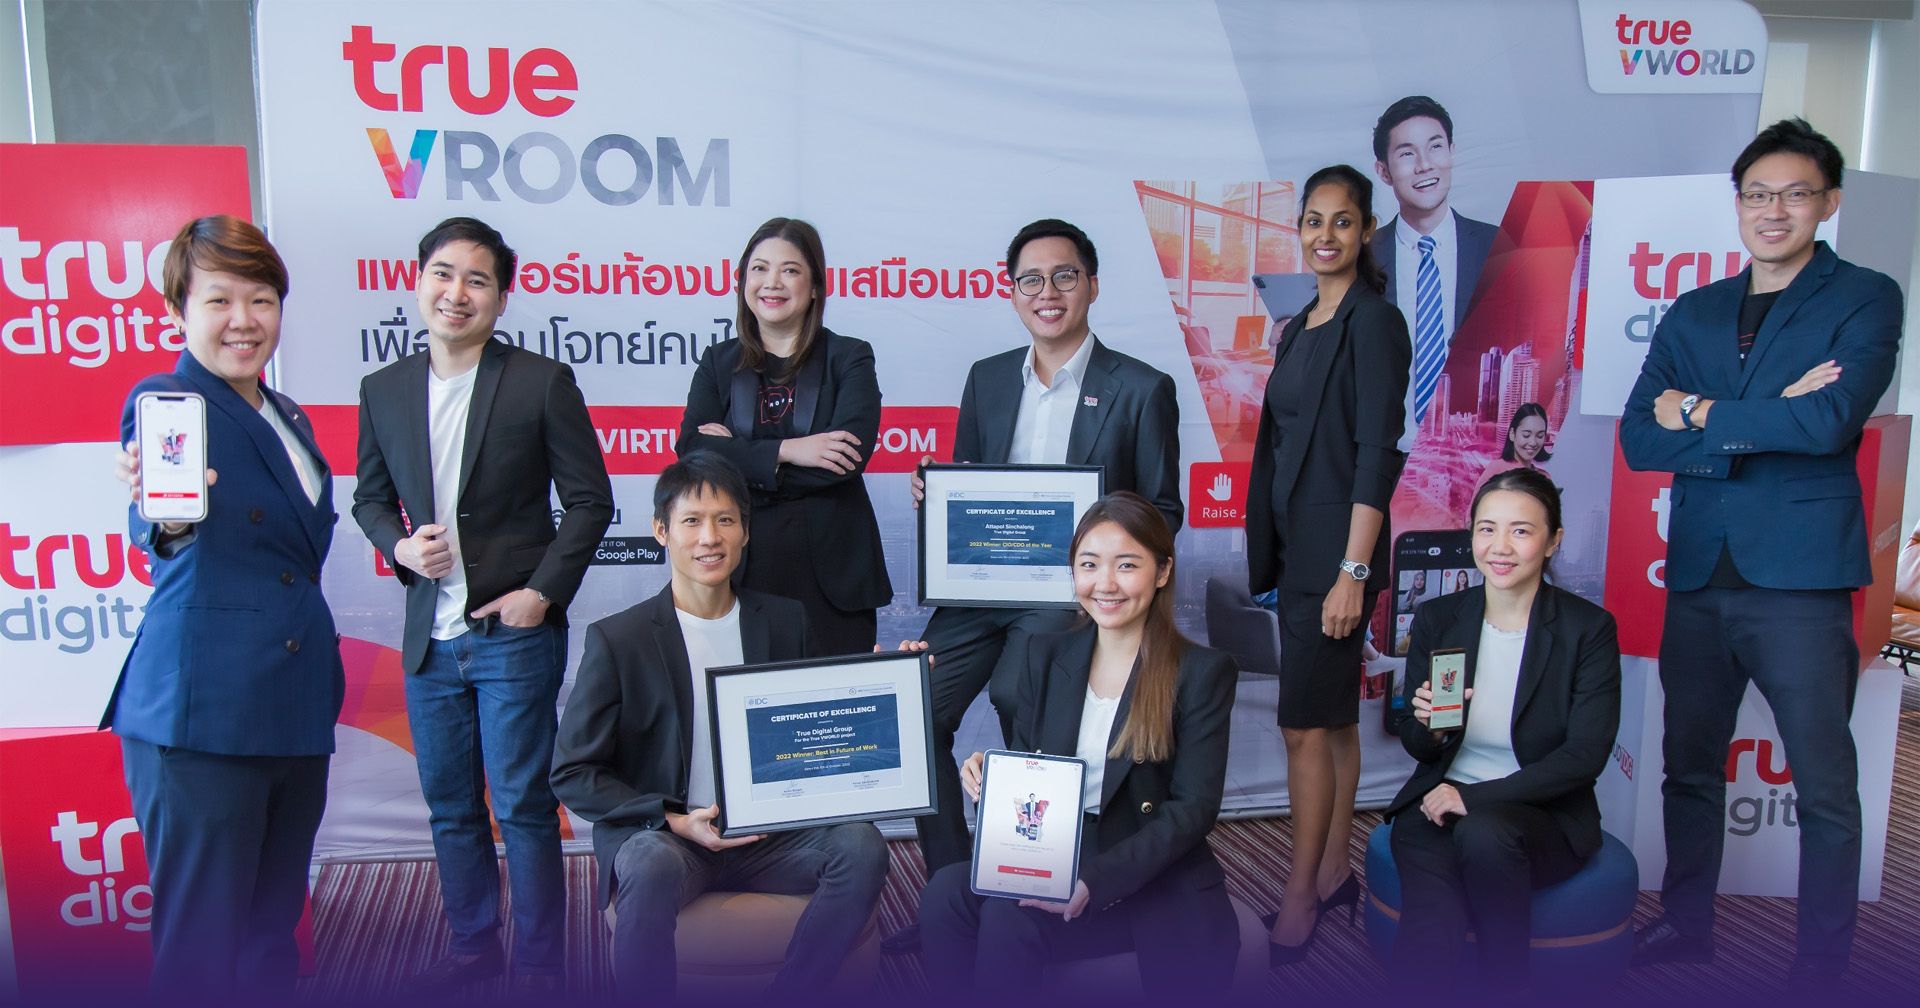 True VWORLD คว้า 2 รางวัลใหญ่ จาก IDC ASEAN สิงคโปร์ “Best in Future of Work” กับ “True VWORLD” และ “CIO/CDO of the Year”